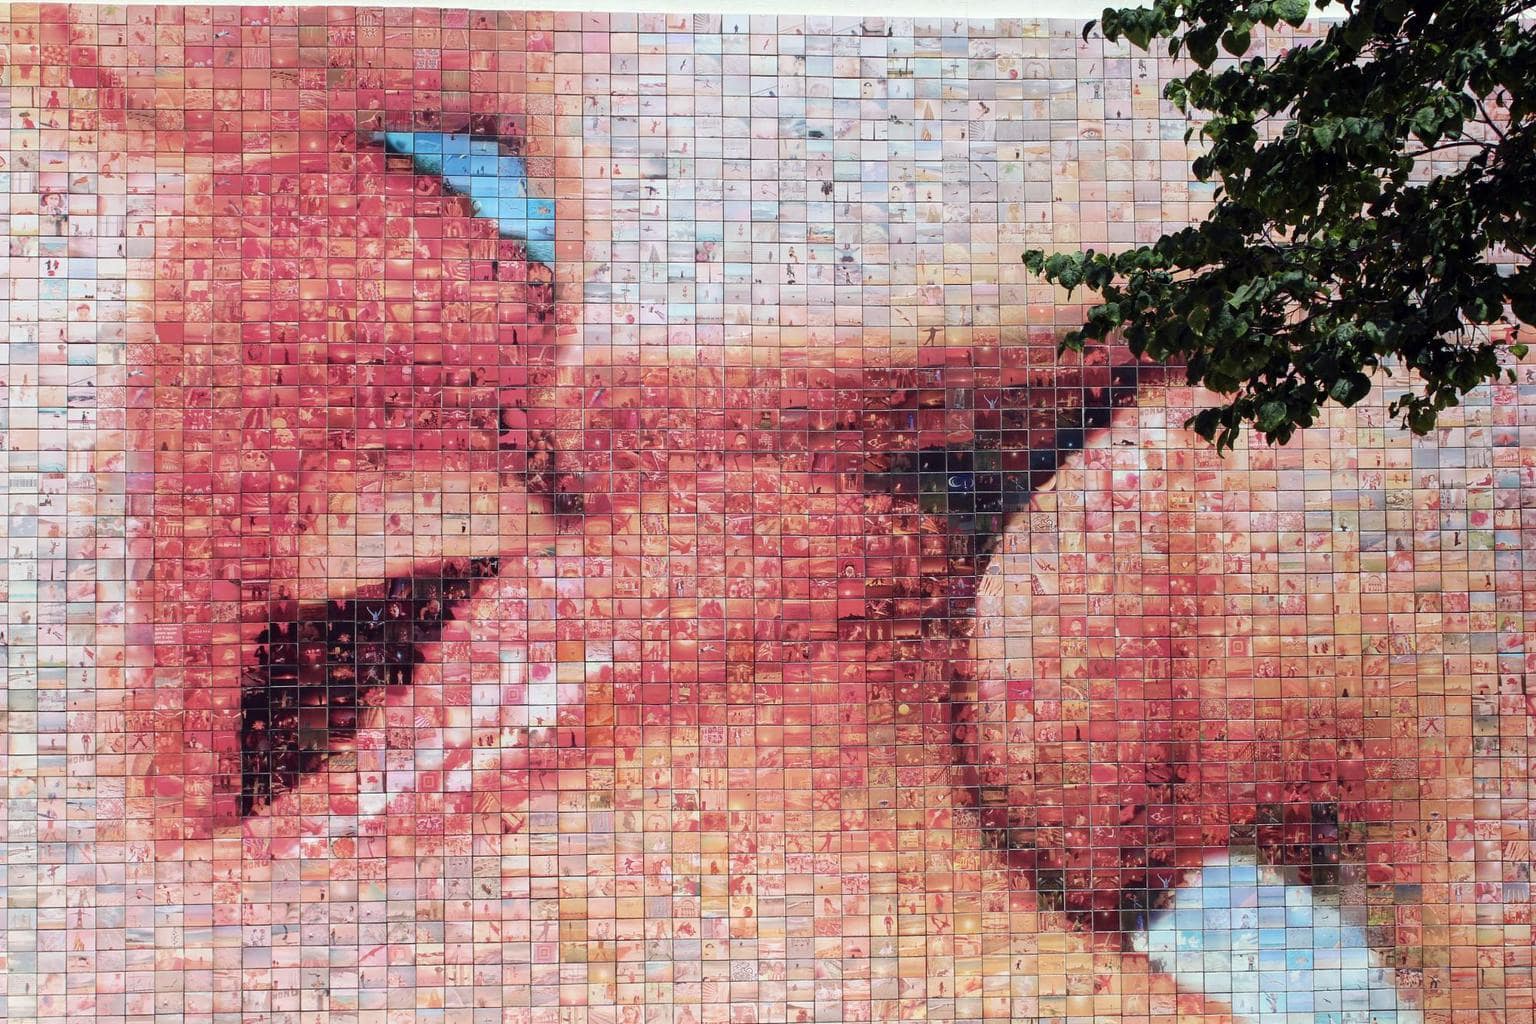 The kiss mural in Barcelona